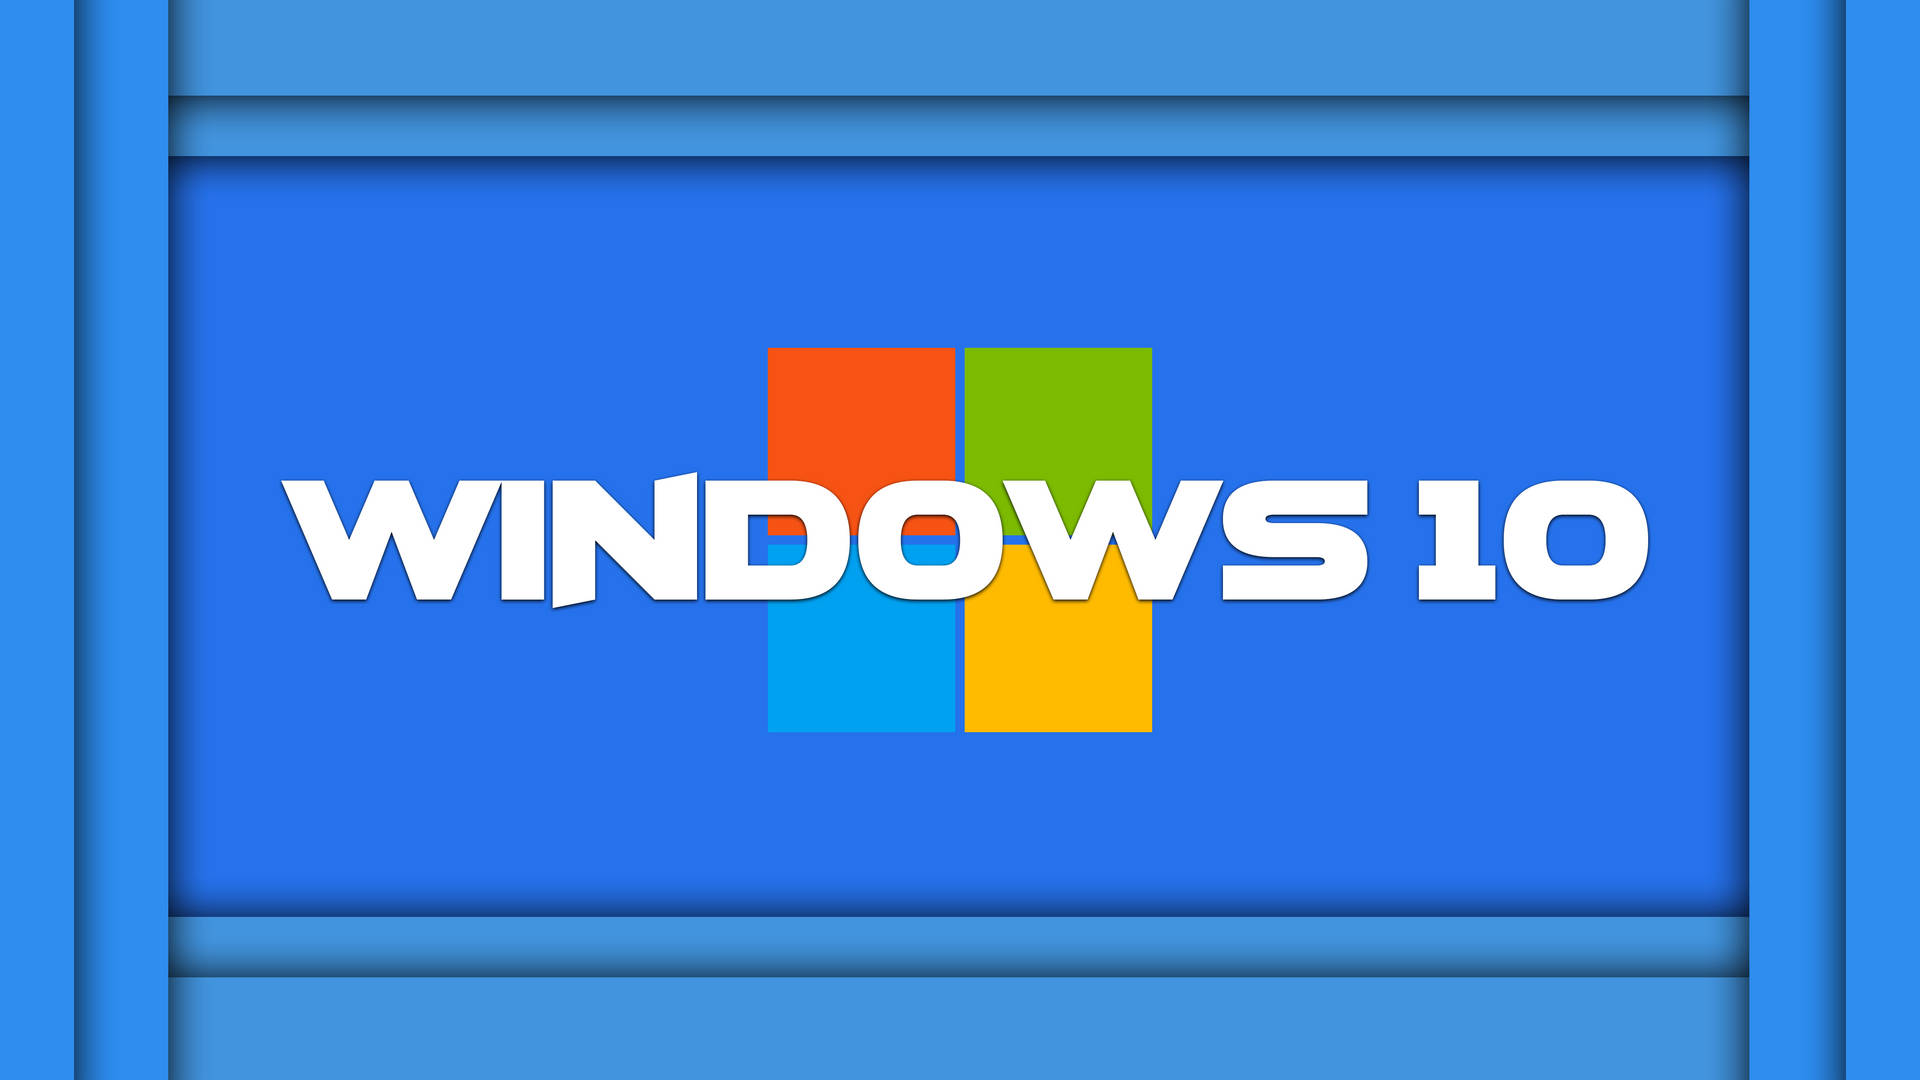 Windows Logo Computer Lock Screen Wallpaper